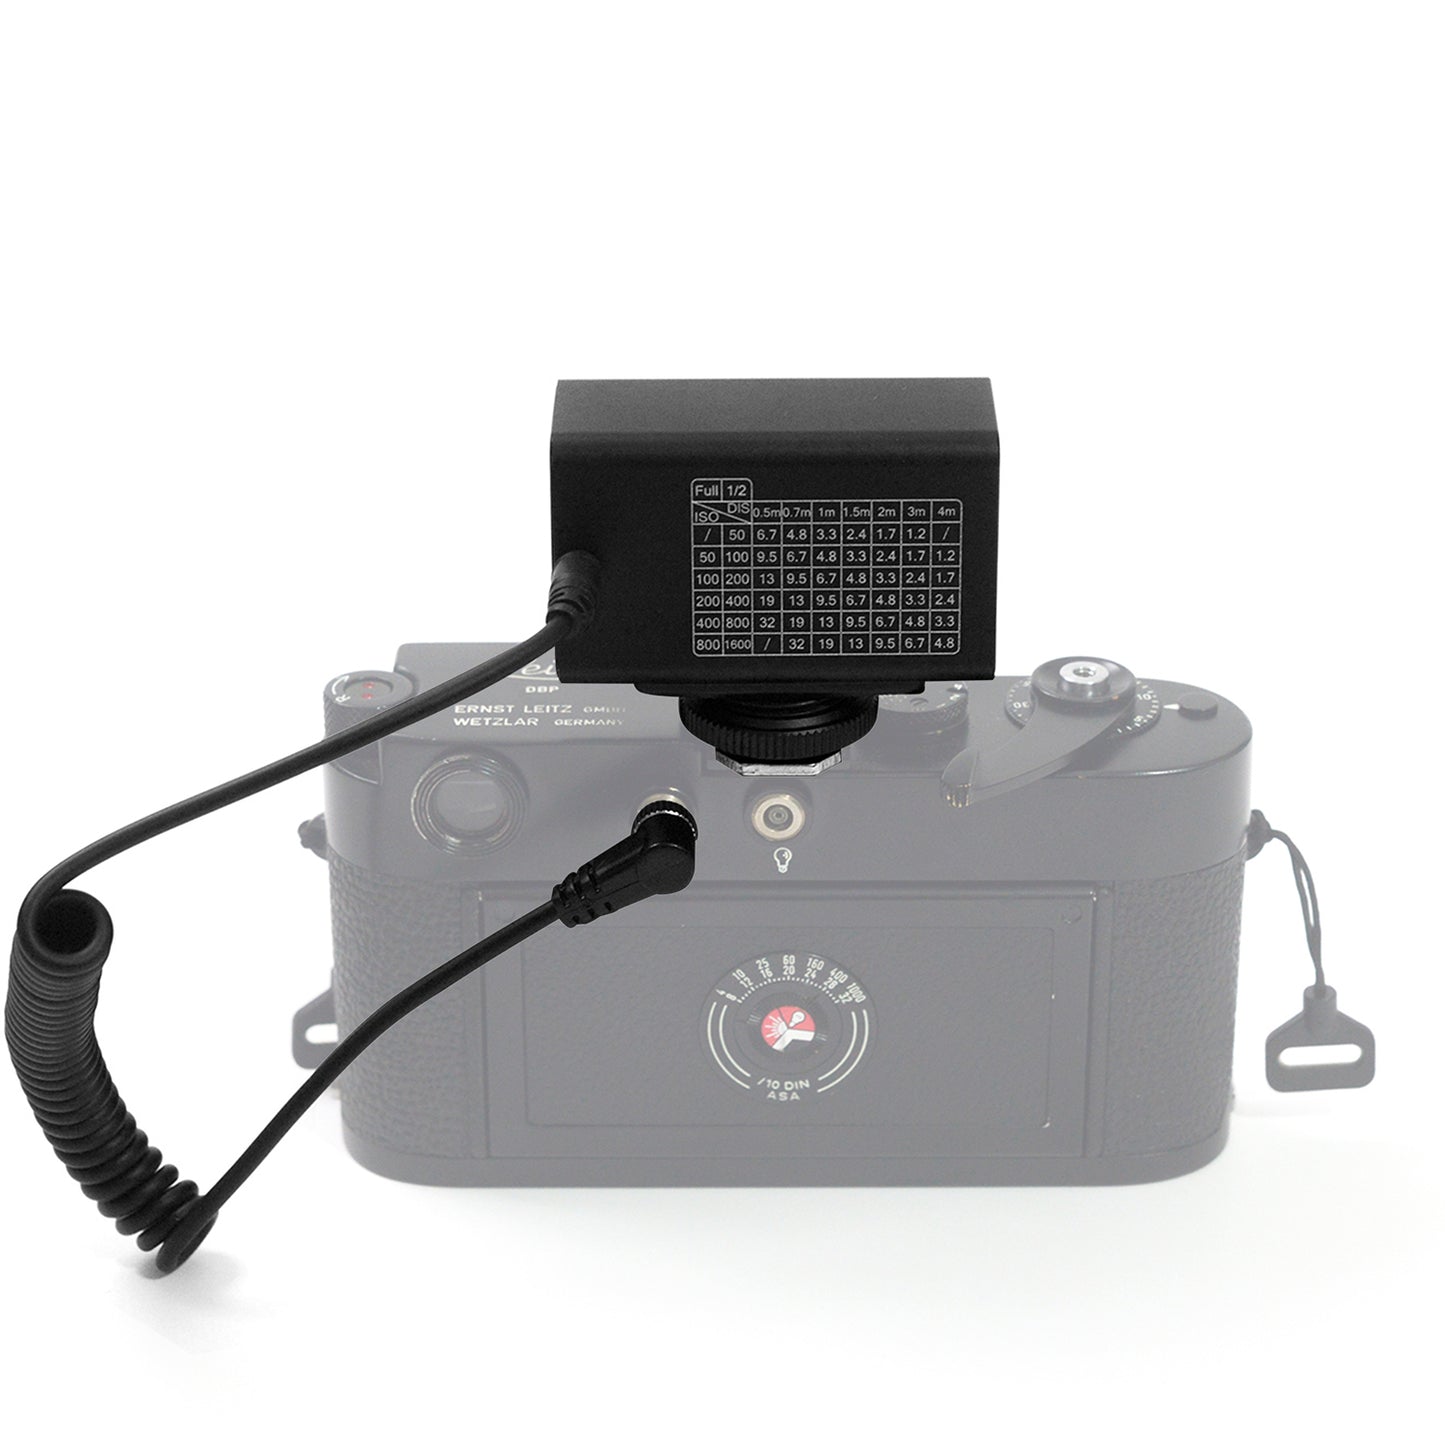 Portable Simple Flash Flashlight Camera Flash For Digital And Film Cameras